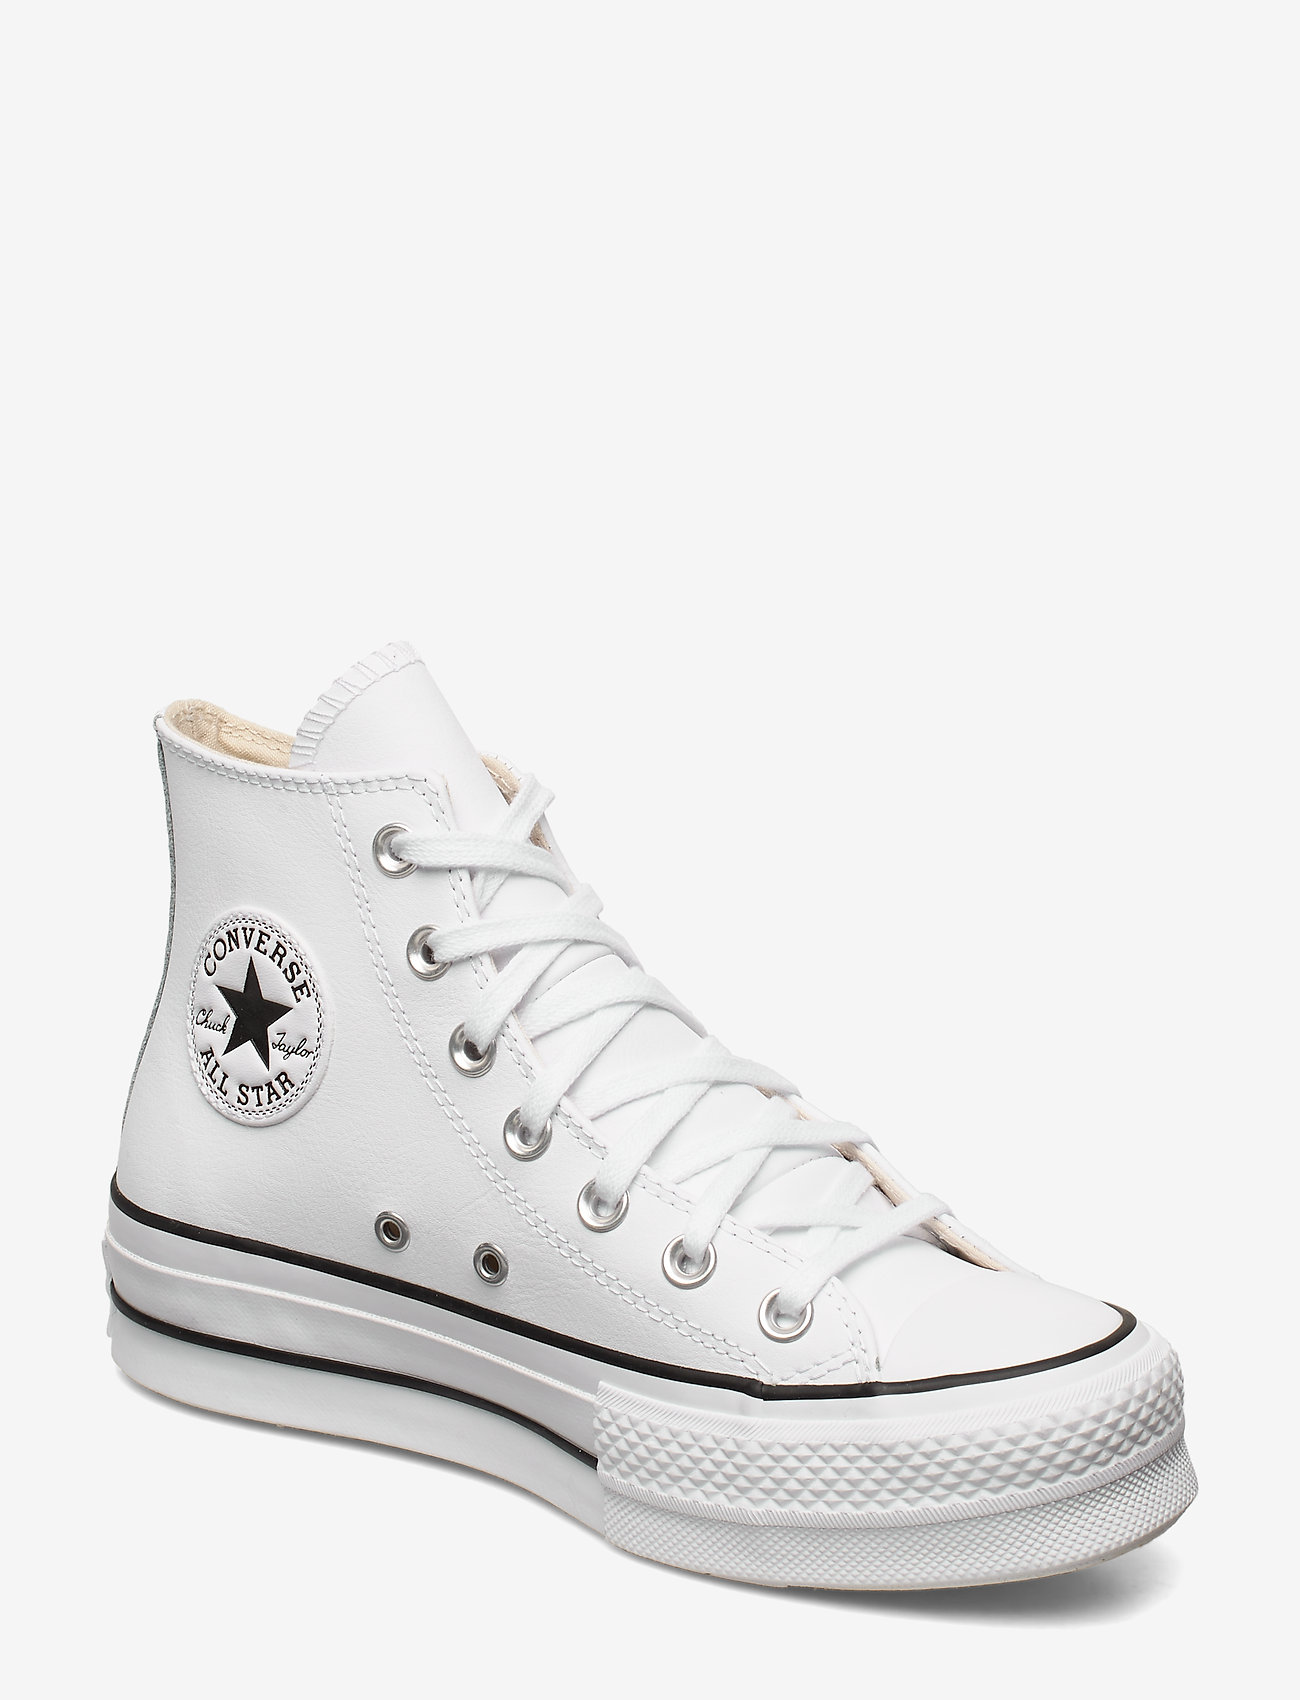 Converse - Chuck Taylor All Star Lift - white/black/white - 0